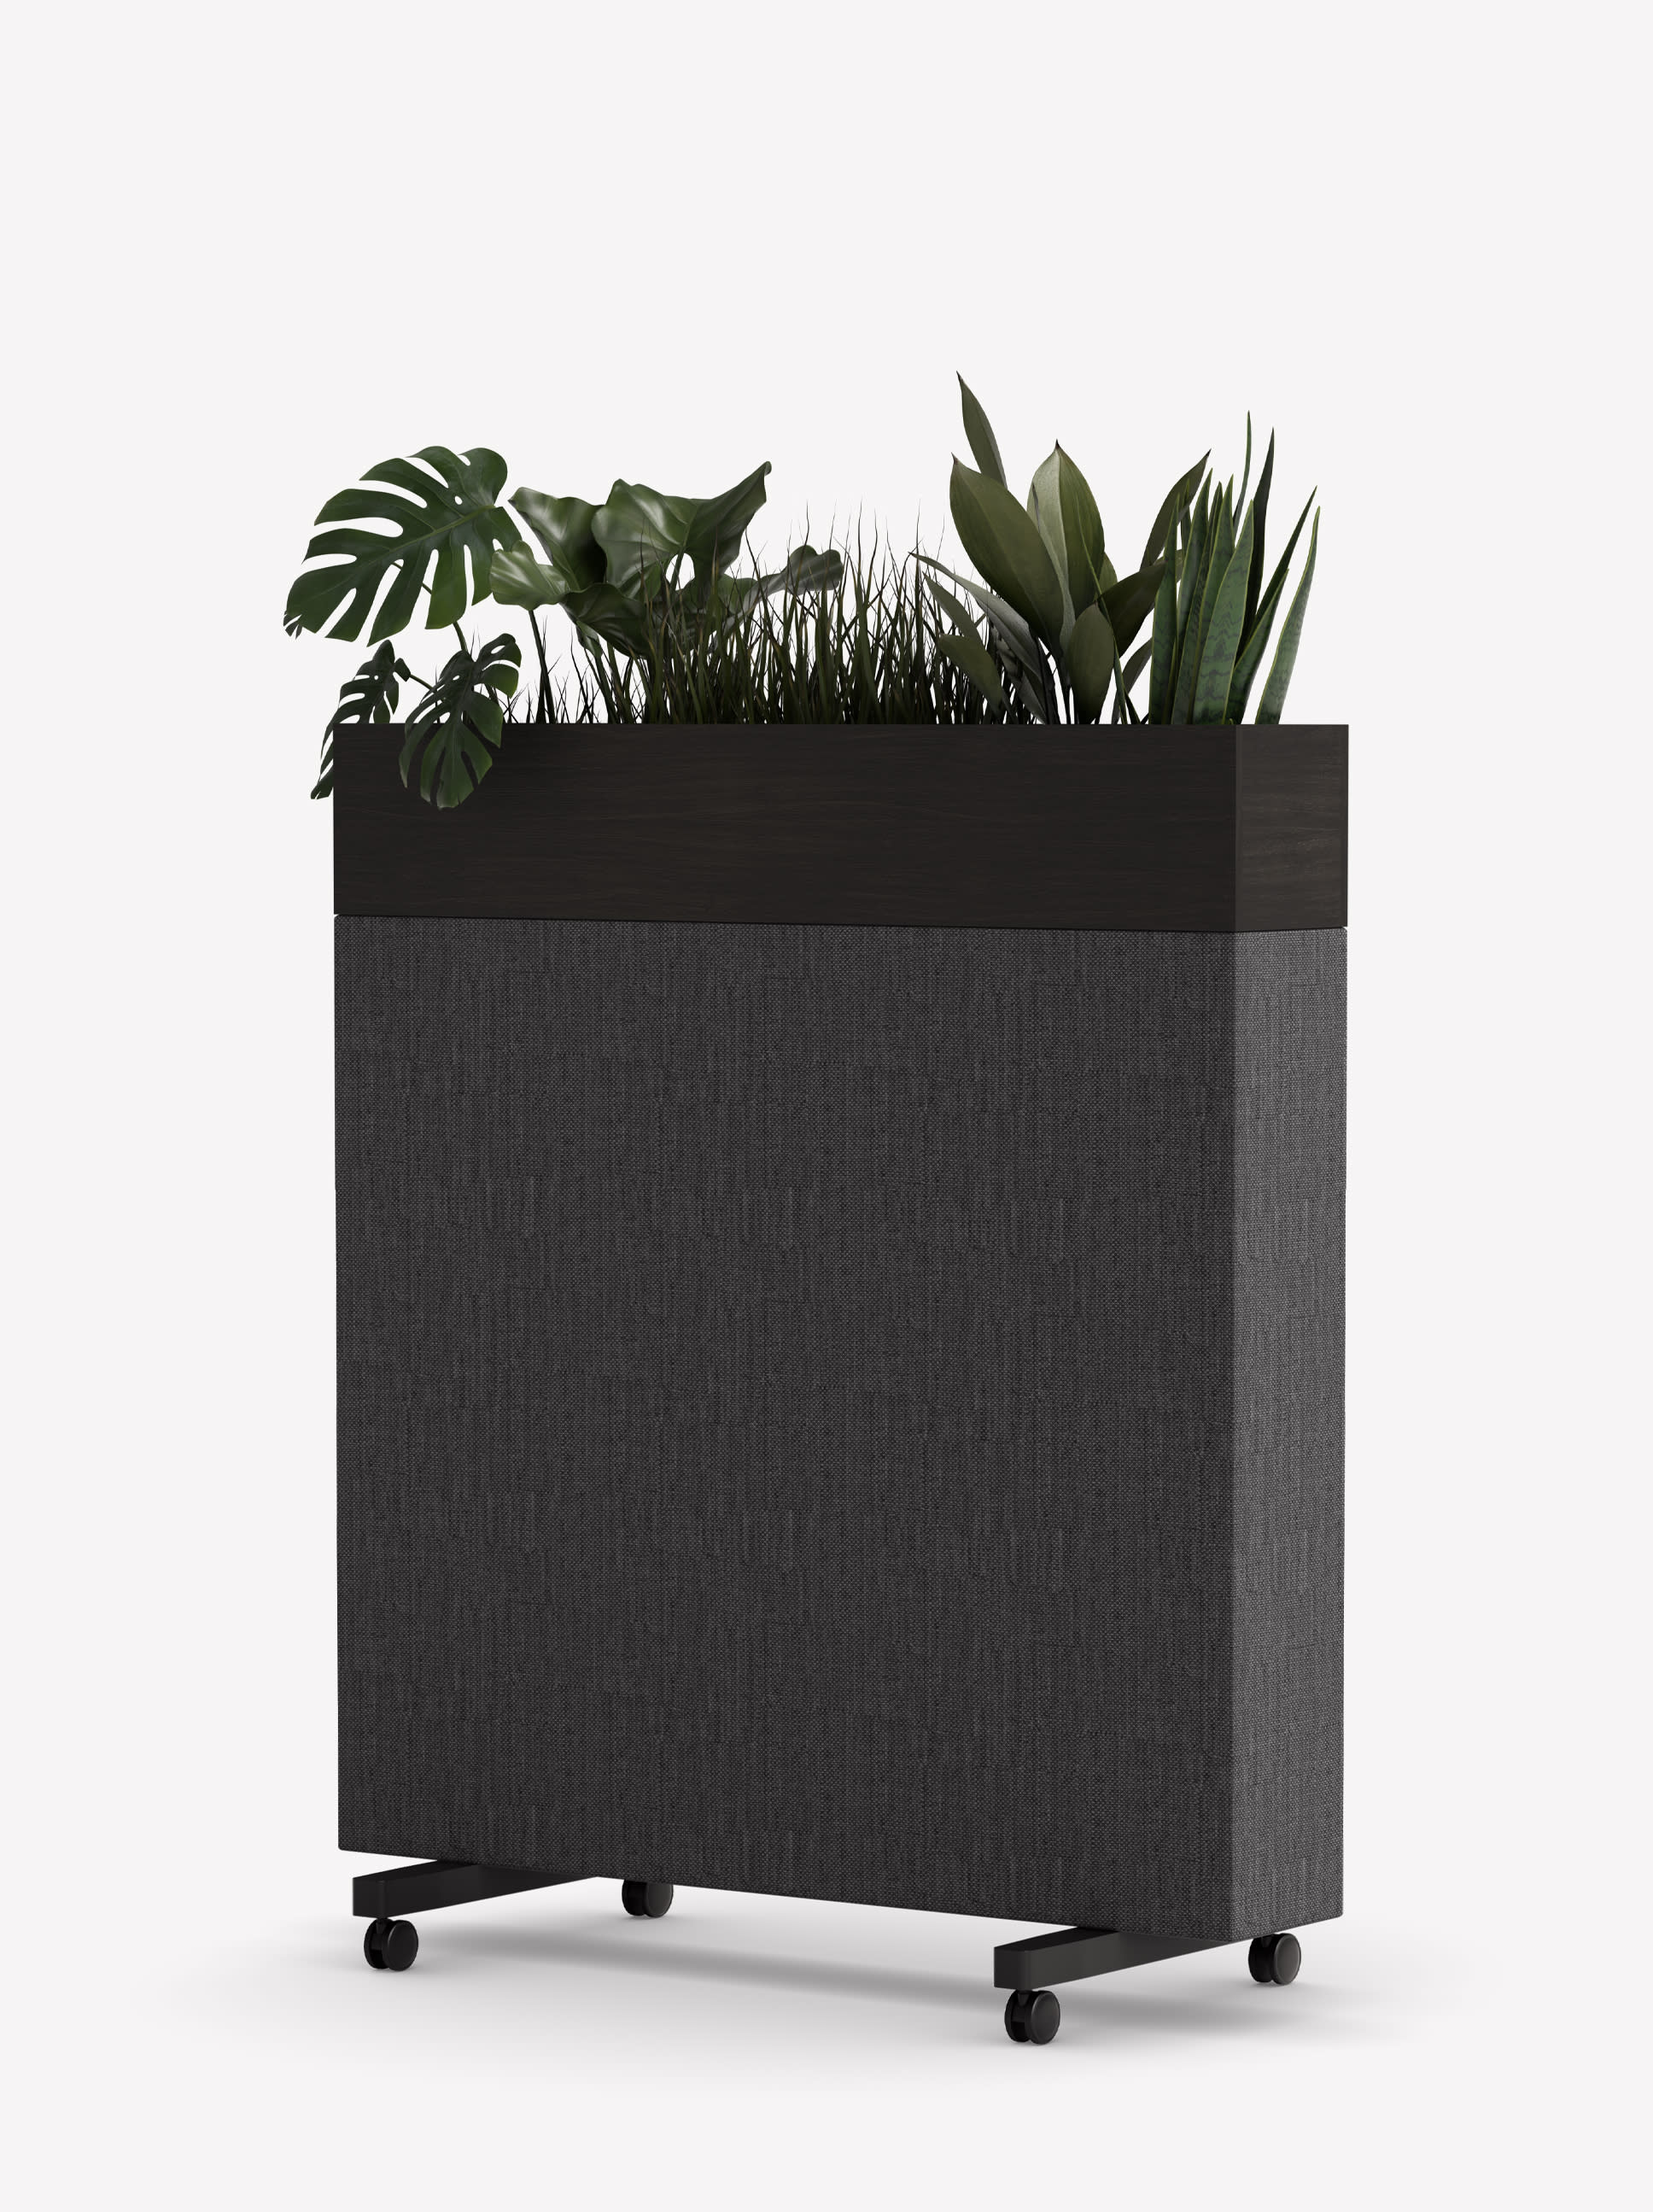 Zilenzio Zorla Mobile Sound-Absorbing Floor Planter with dark grey fabric, black ash veneer plant box and black wheels.